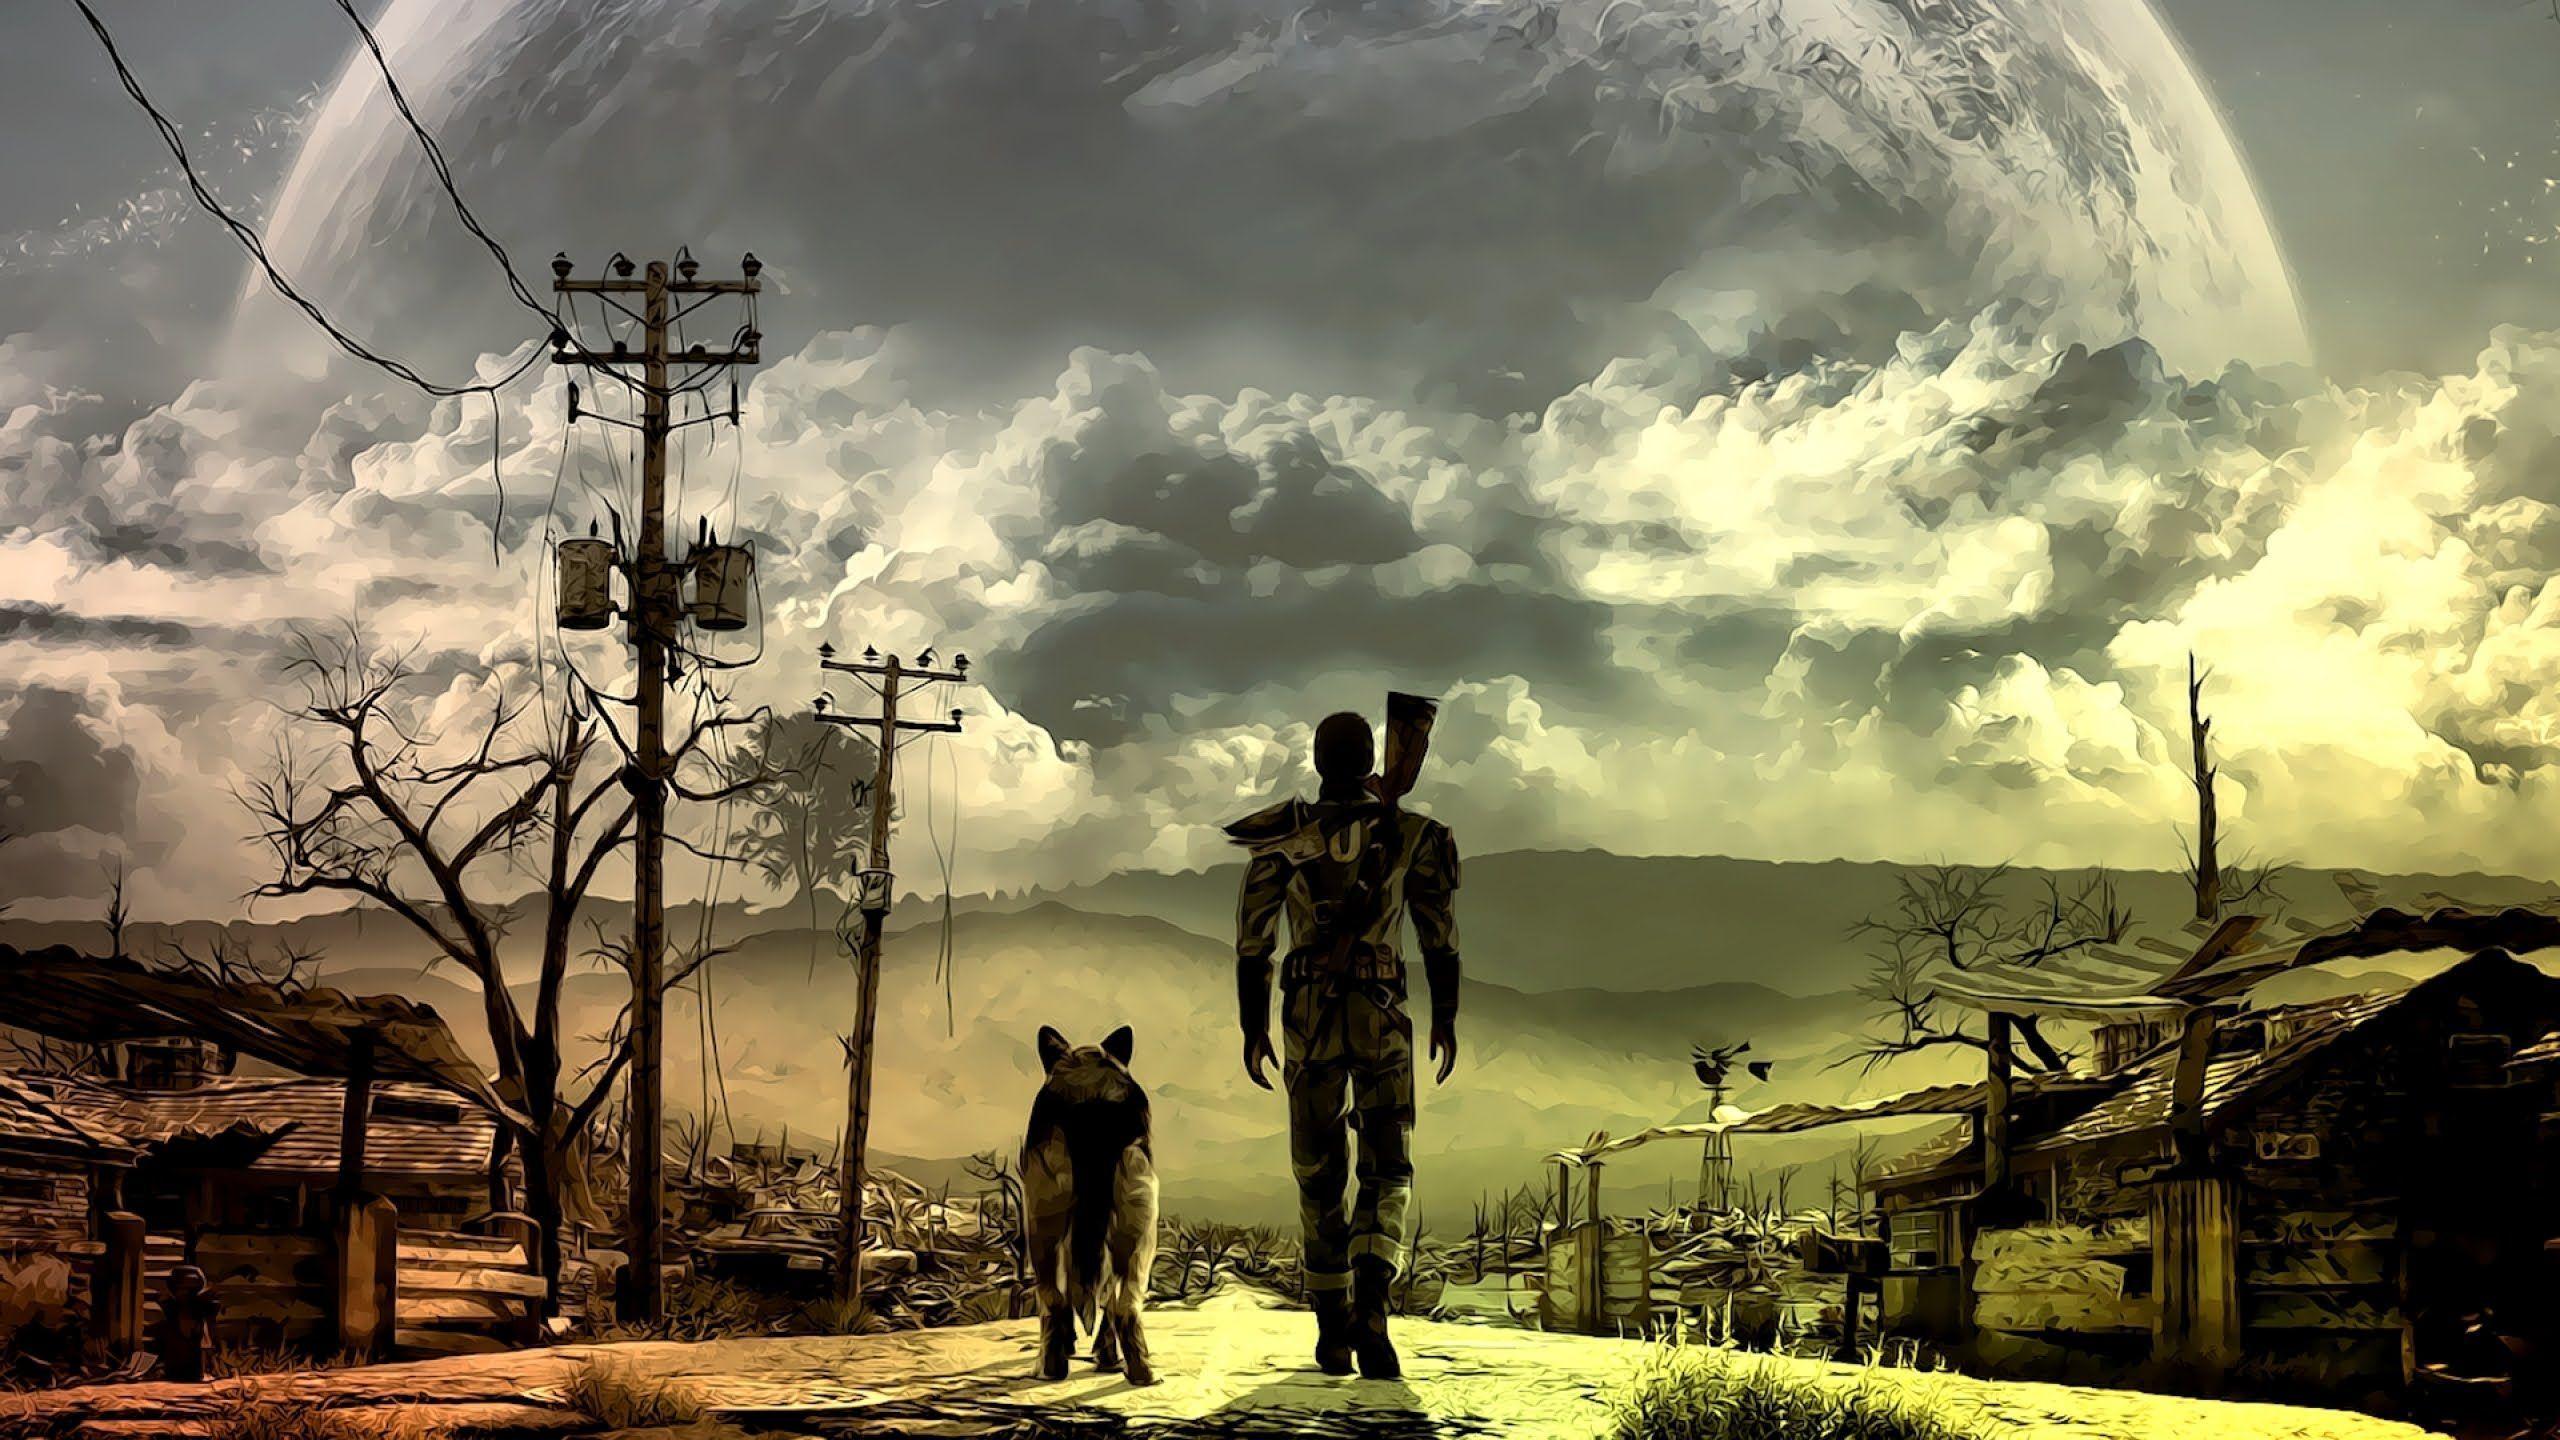 Fallout 4 Wallpaper High Quality. Wallpaper. Fallout